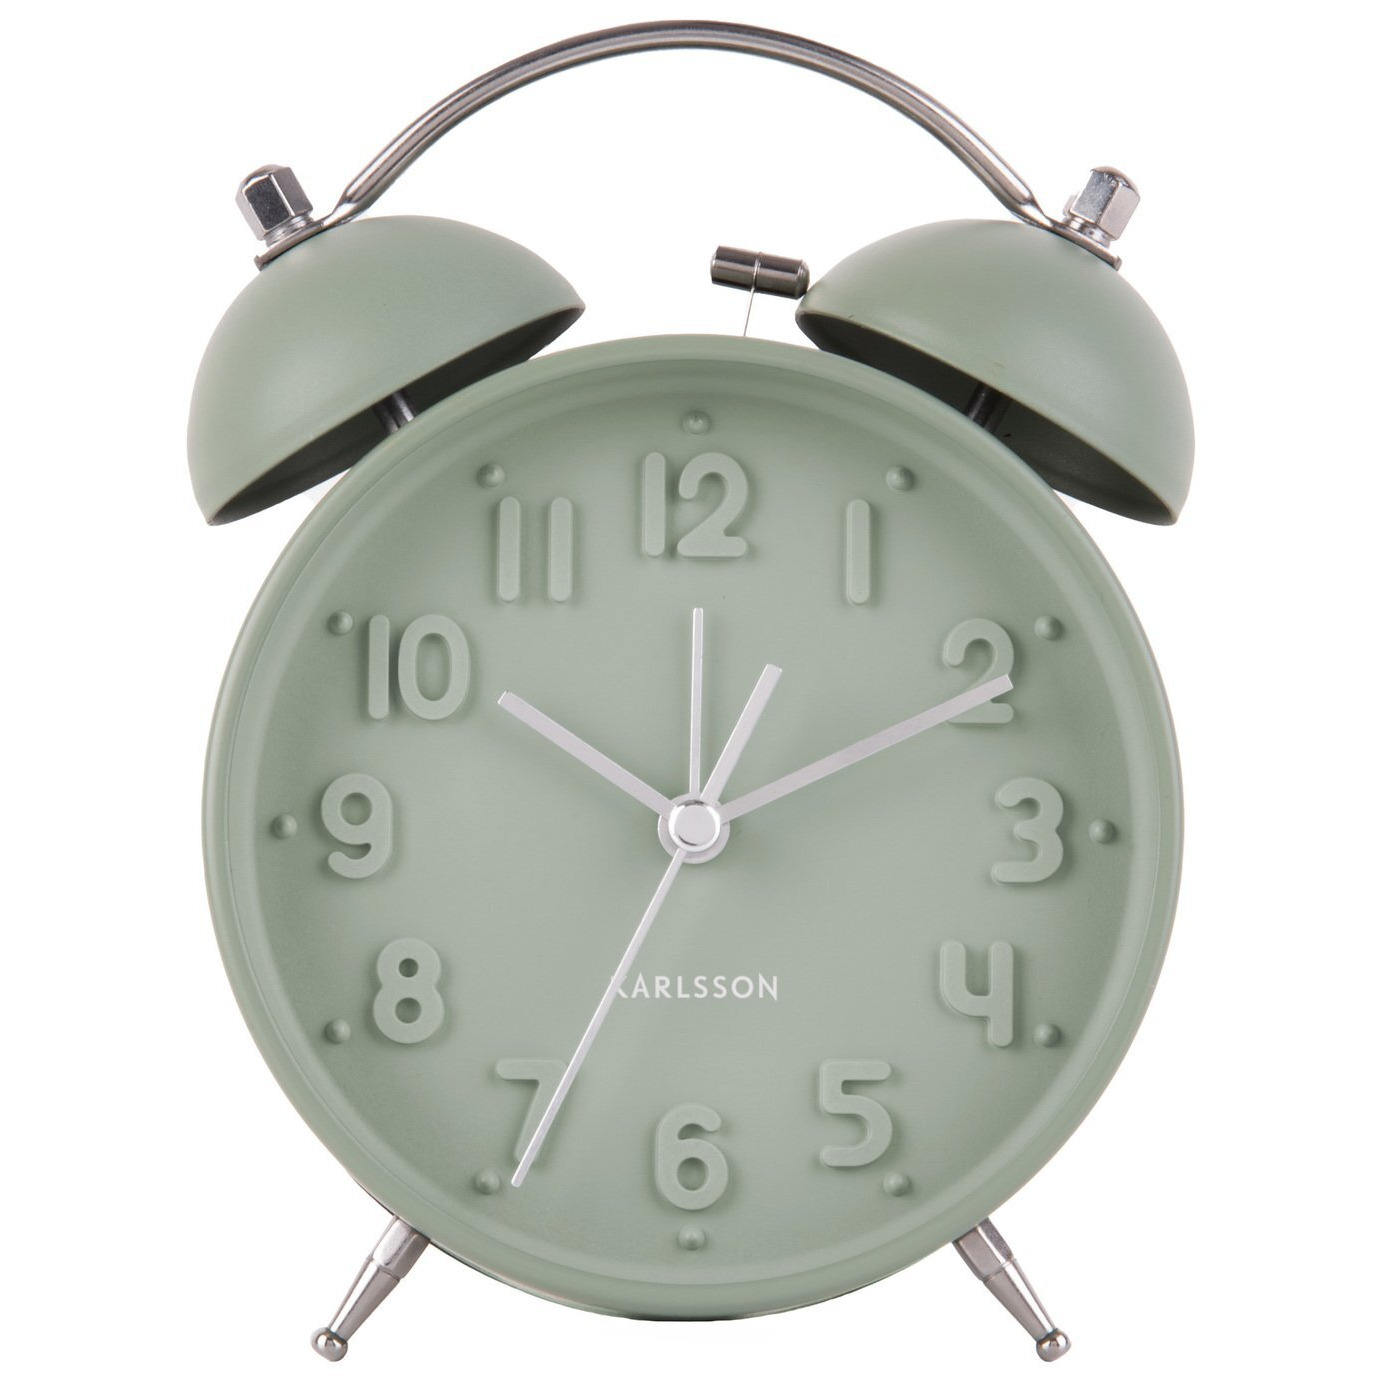 Karlsson Iconic Analogue Alarm Clock - Sage Green - image 1